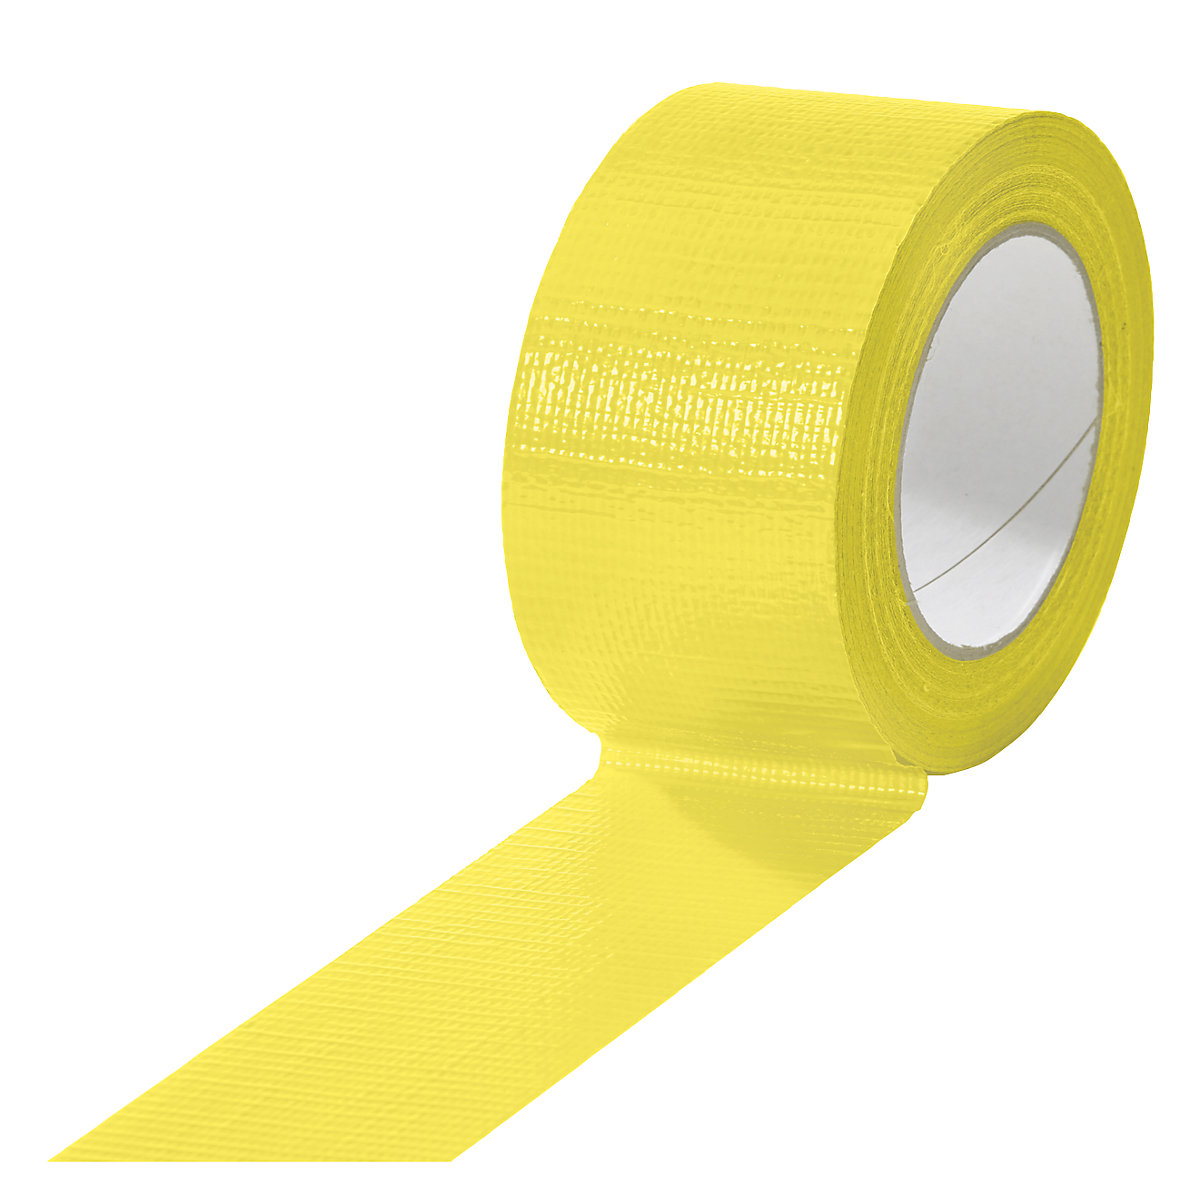 Tkaninová páska, v různých barvách, bal.j. 18 rolí, žlutá, šířka pásky 50 mm-13